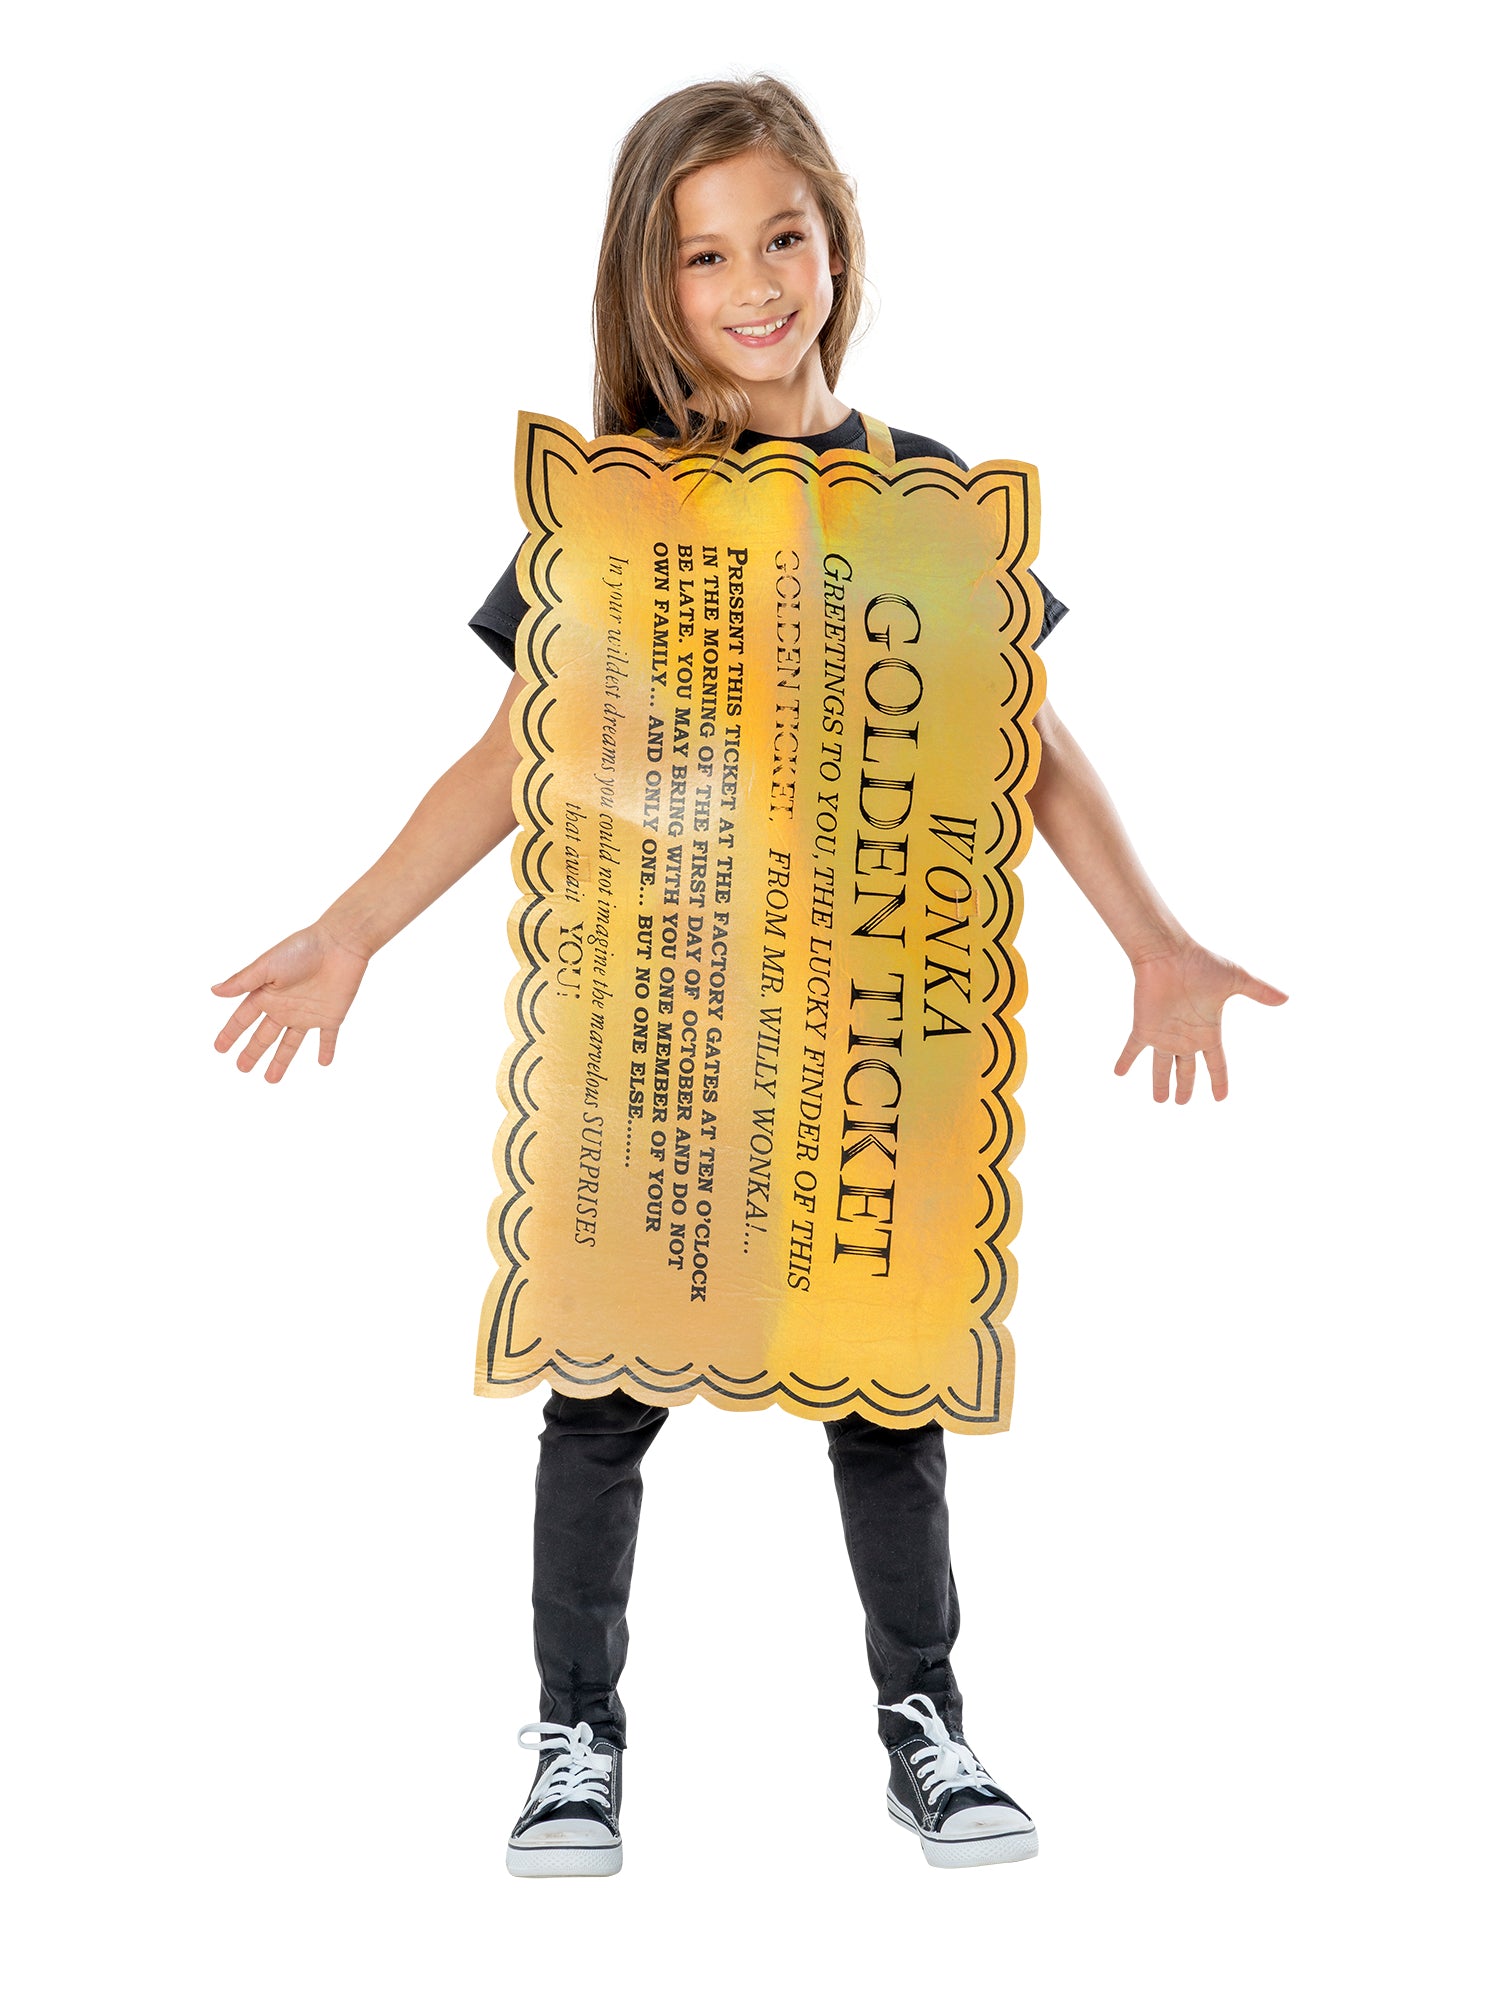 Willy Wonka Golden Ticket Costume